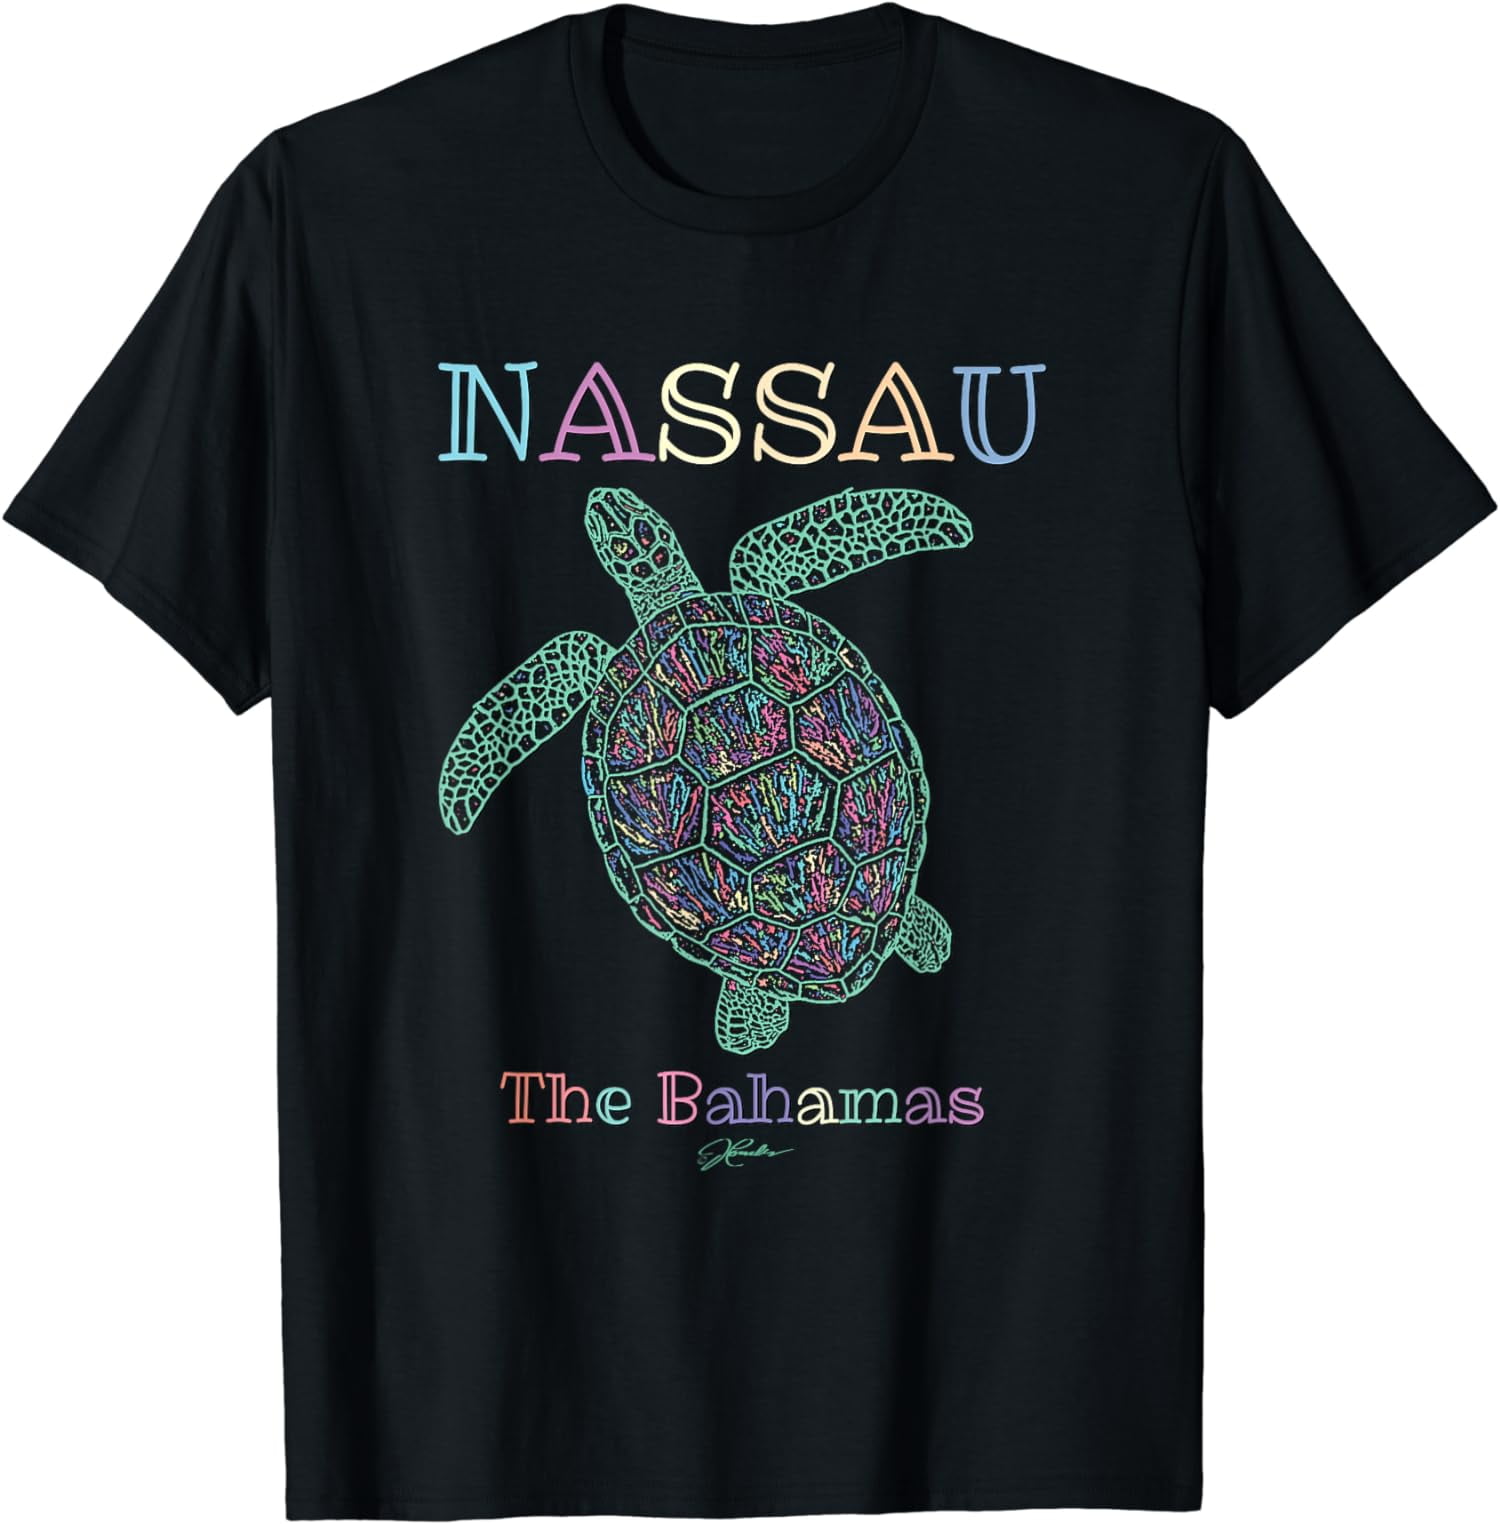 Nassau, The Bahamas, Sea Turtle T-Shirt - Walmart.com